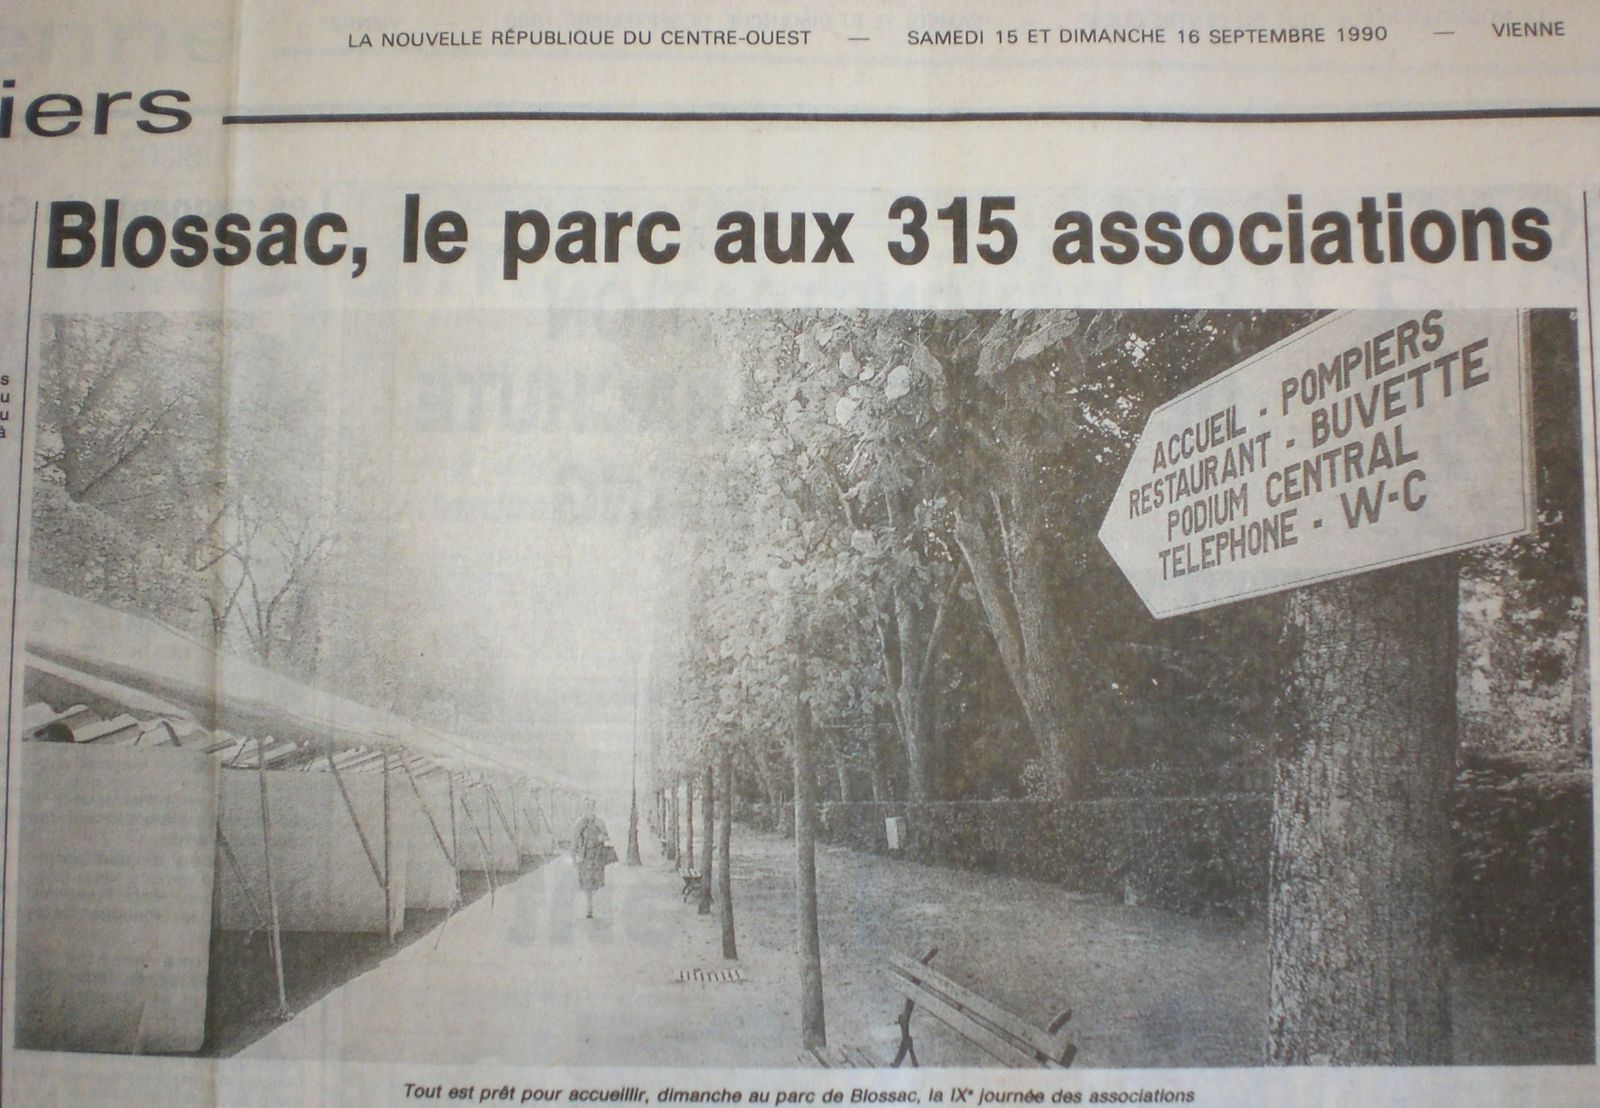 Journee-des-Assoc-Poitiers-1990.JPG